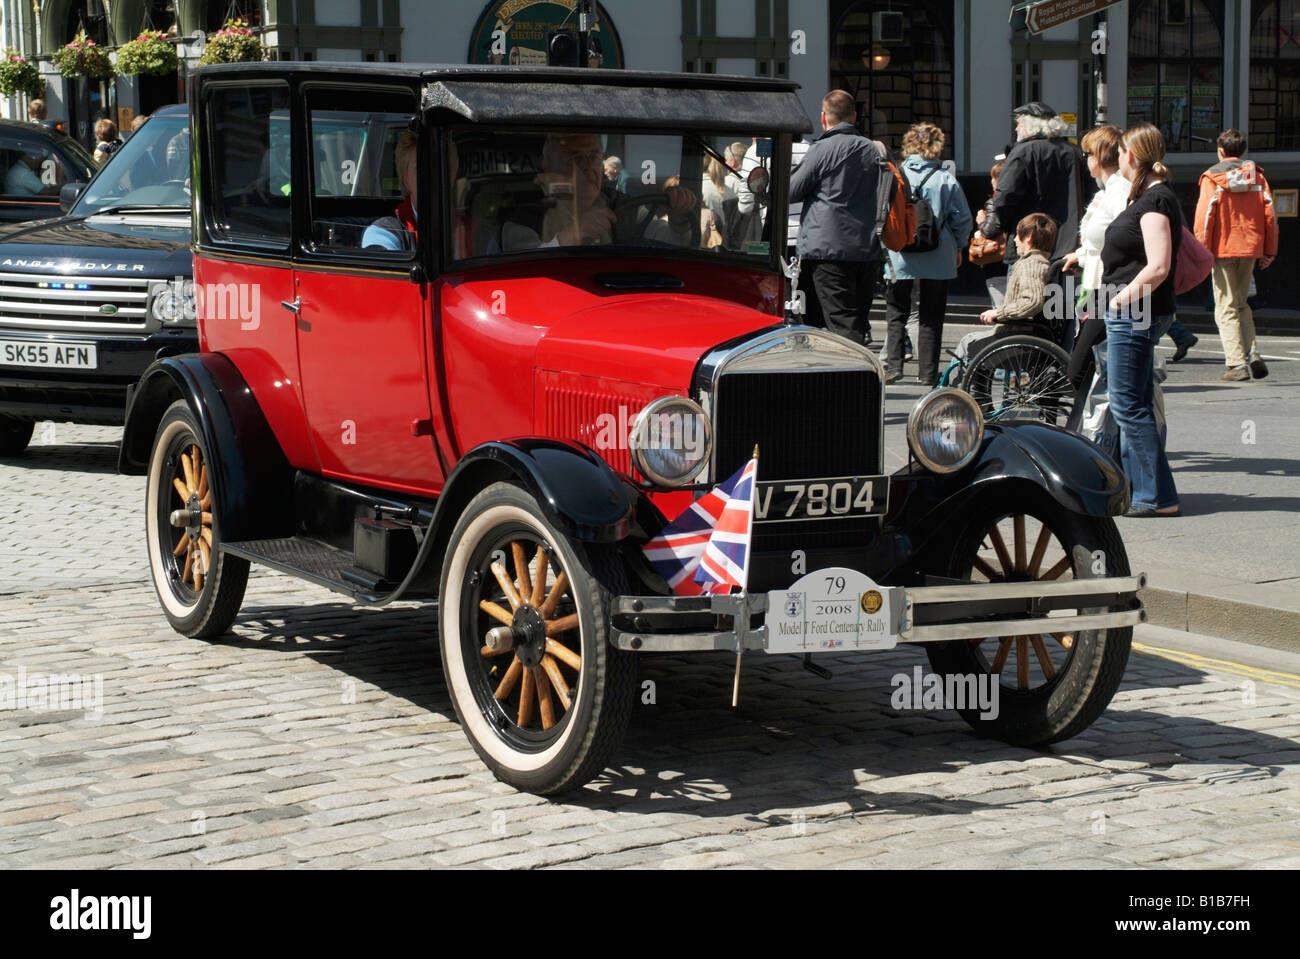 A 1926 Model T Ford tudor sedan taking part in the 2008 Centenary Rally, Edinburgh (editorial only). Stock Photo